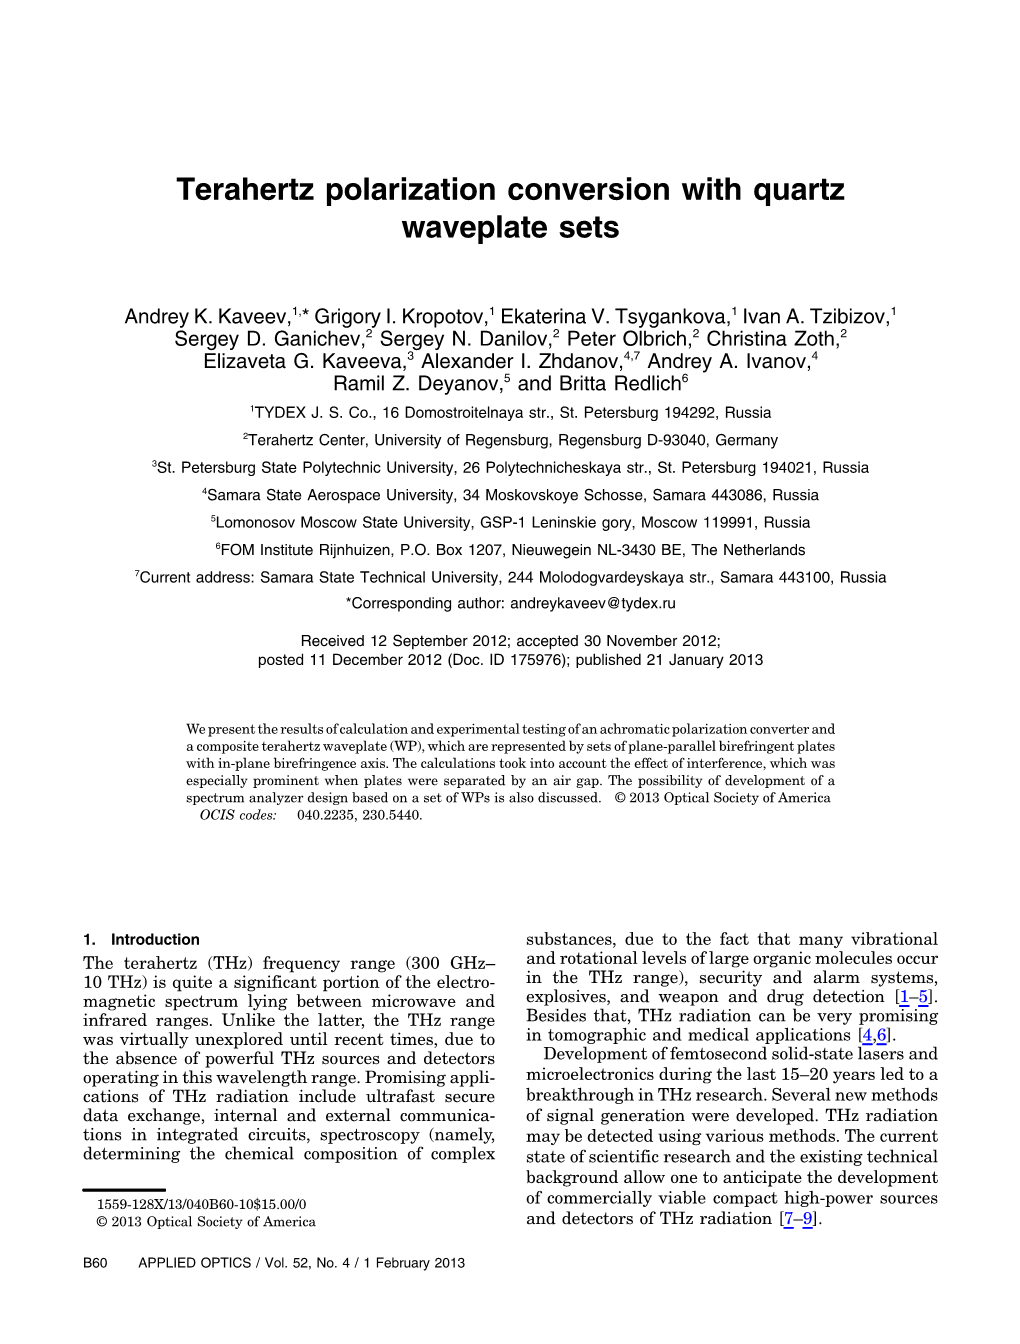 Terahertz Polarization Conversion with Quartz Waveplate Sets